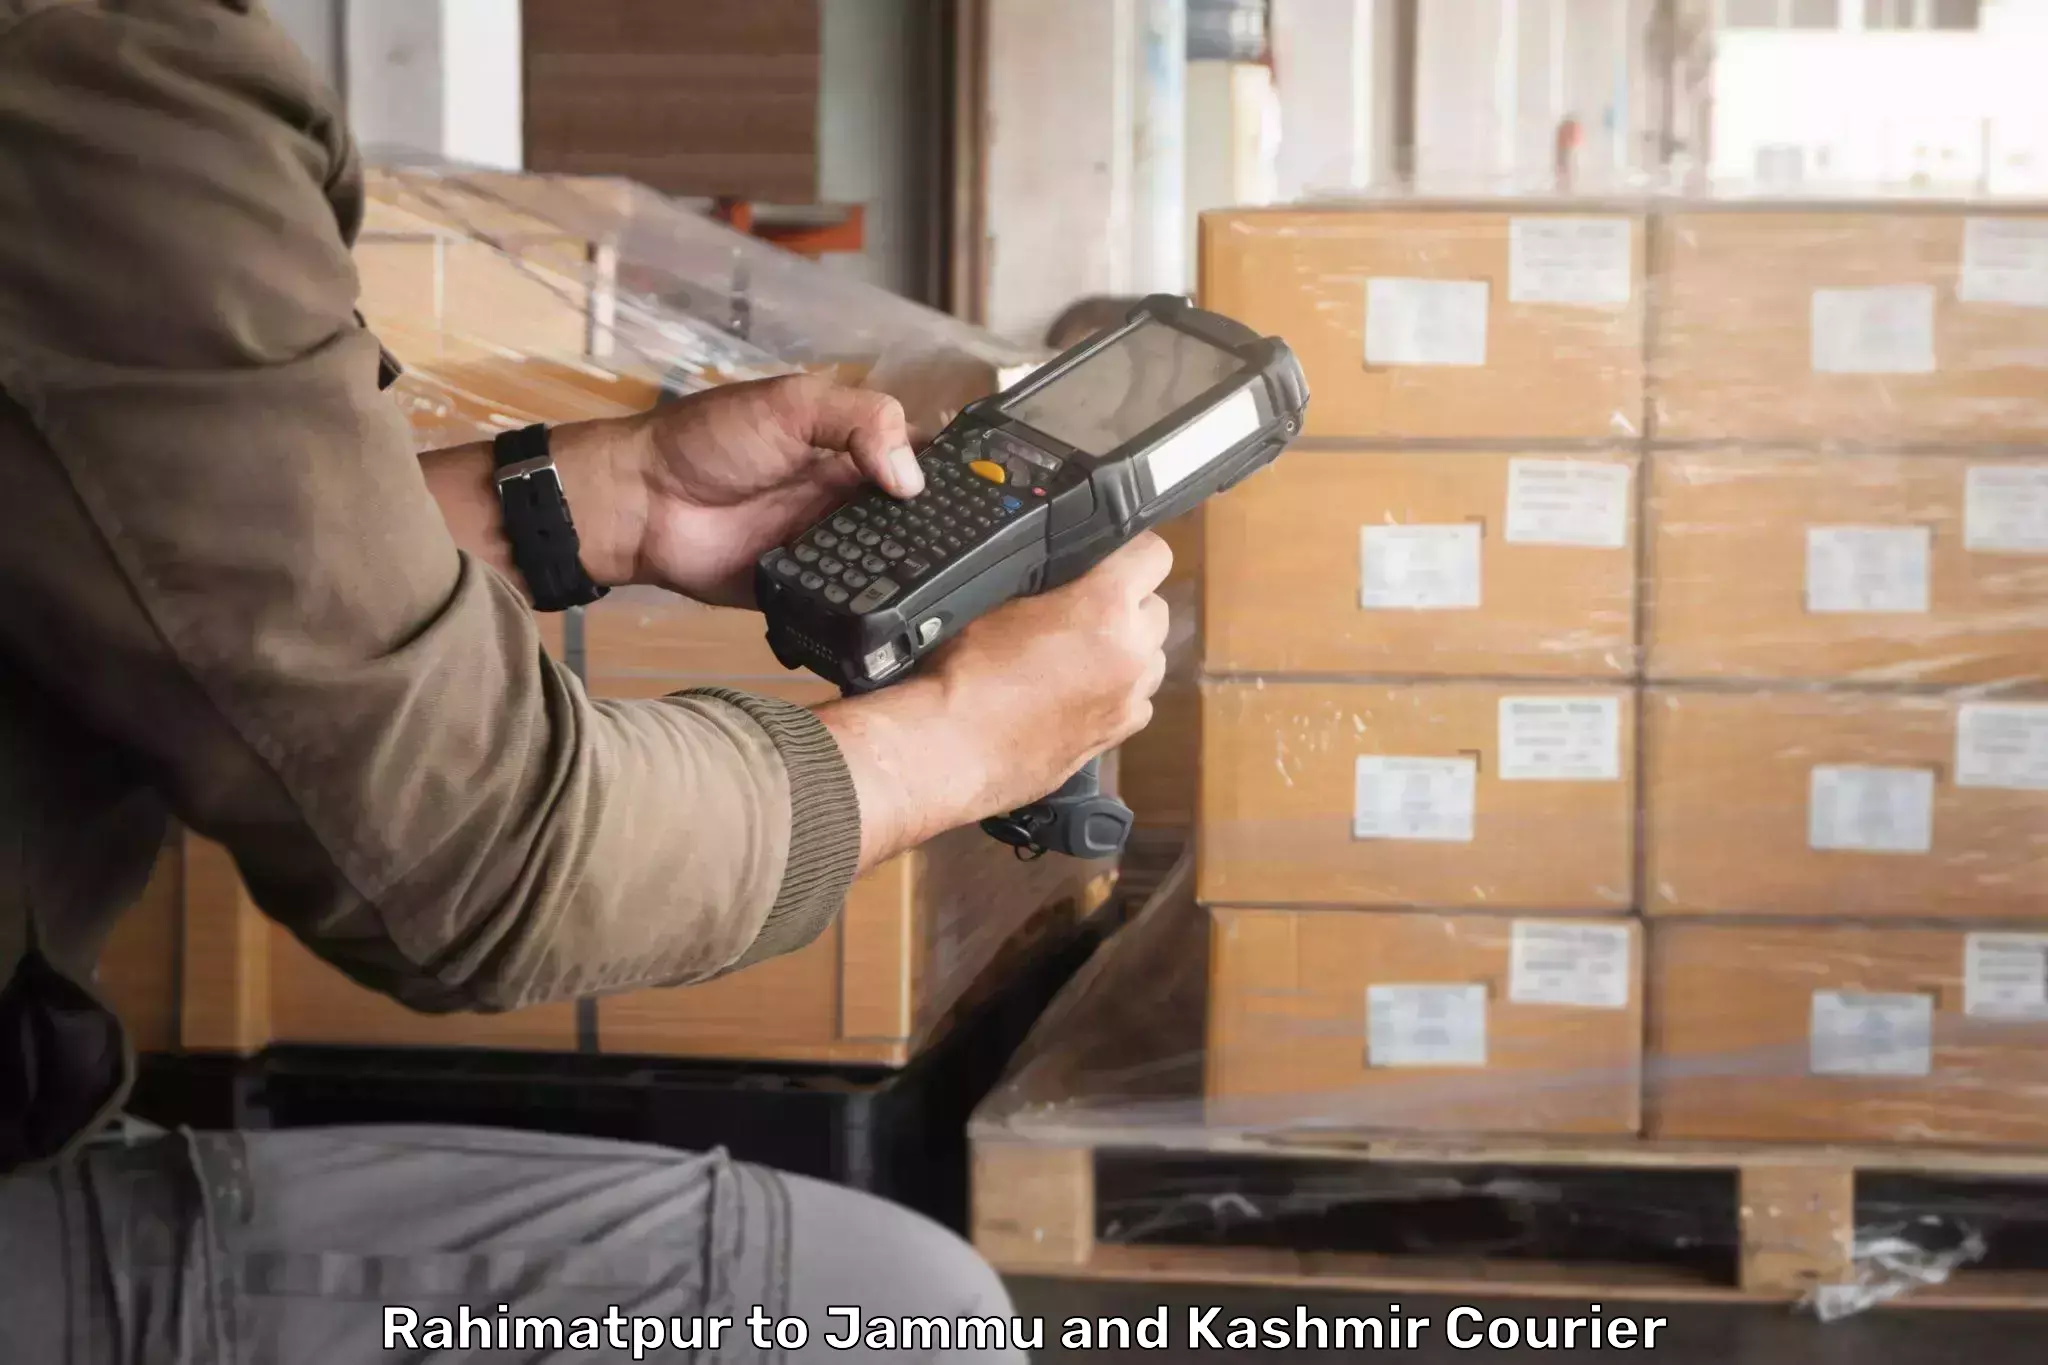 Smart courier technologies Rahimatpur to Baramulla